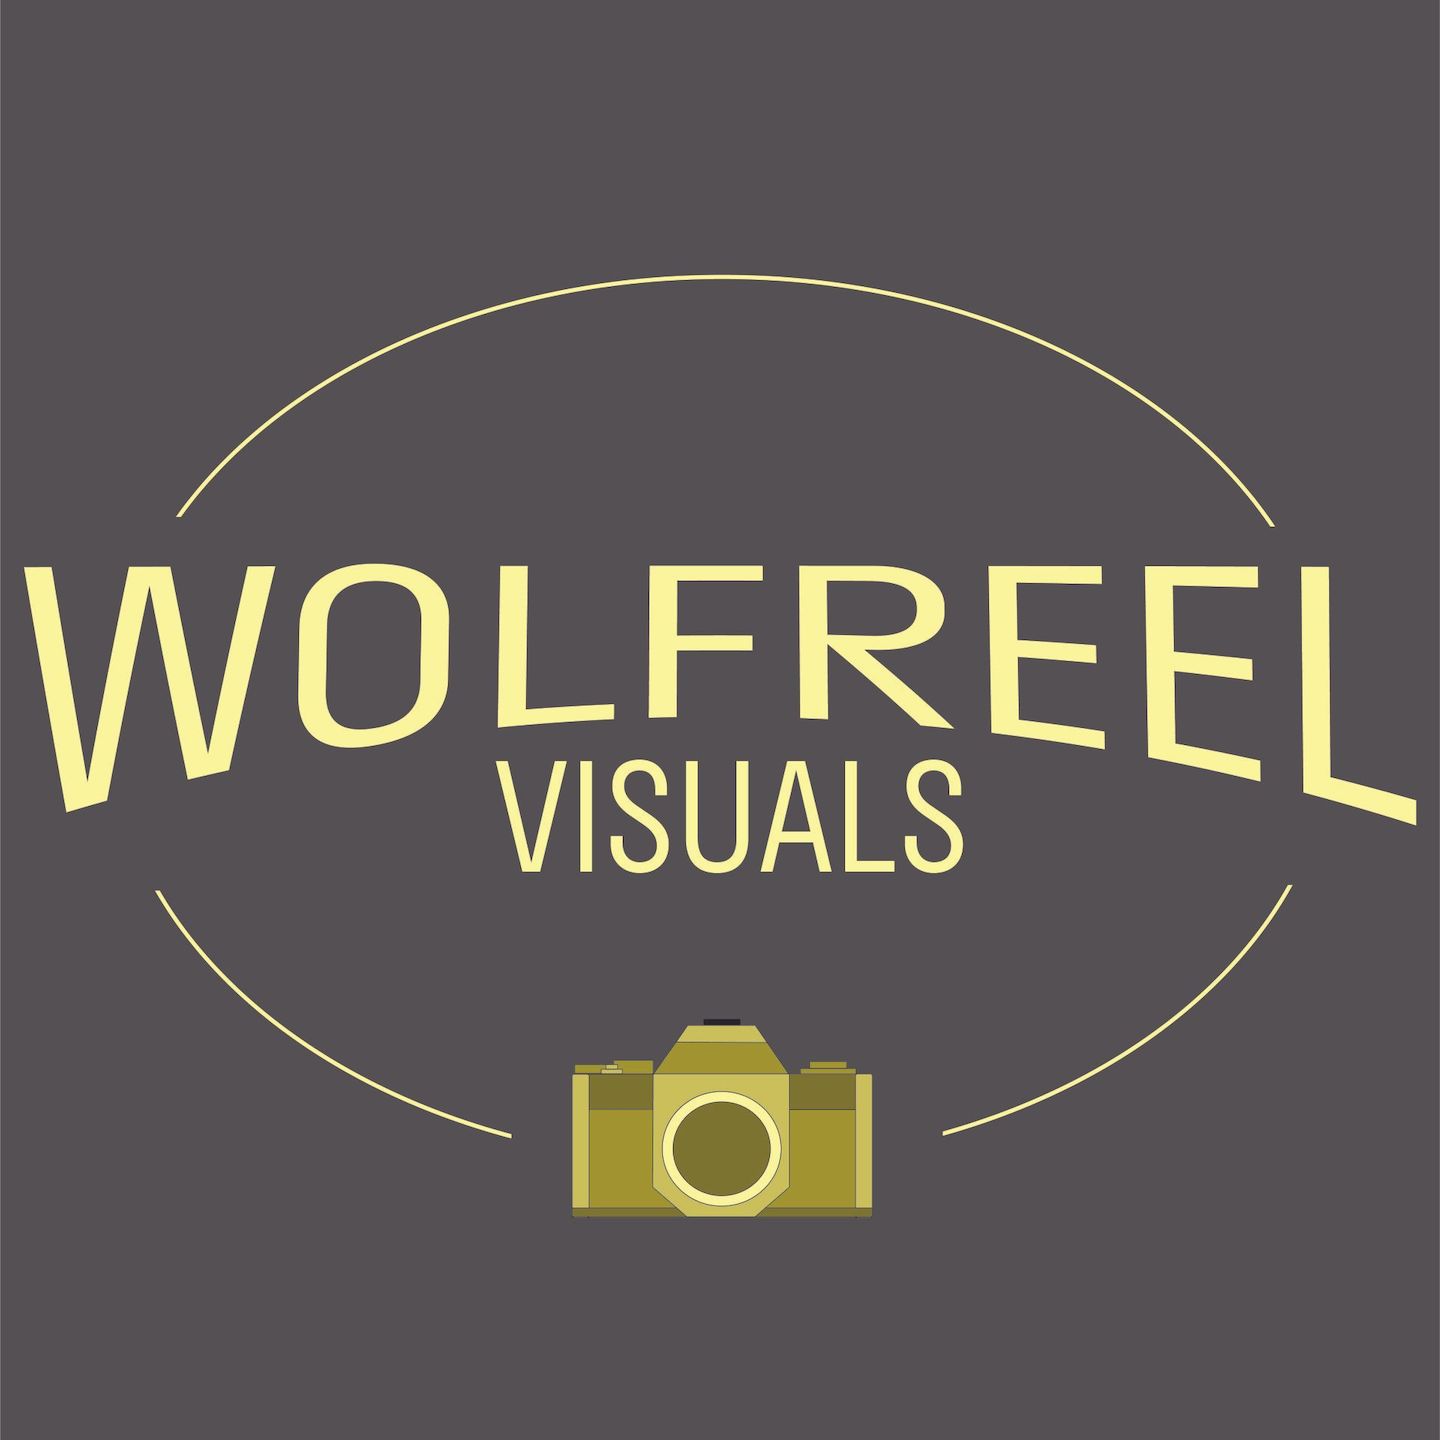 Wolfreel Visuals